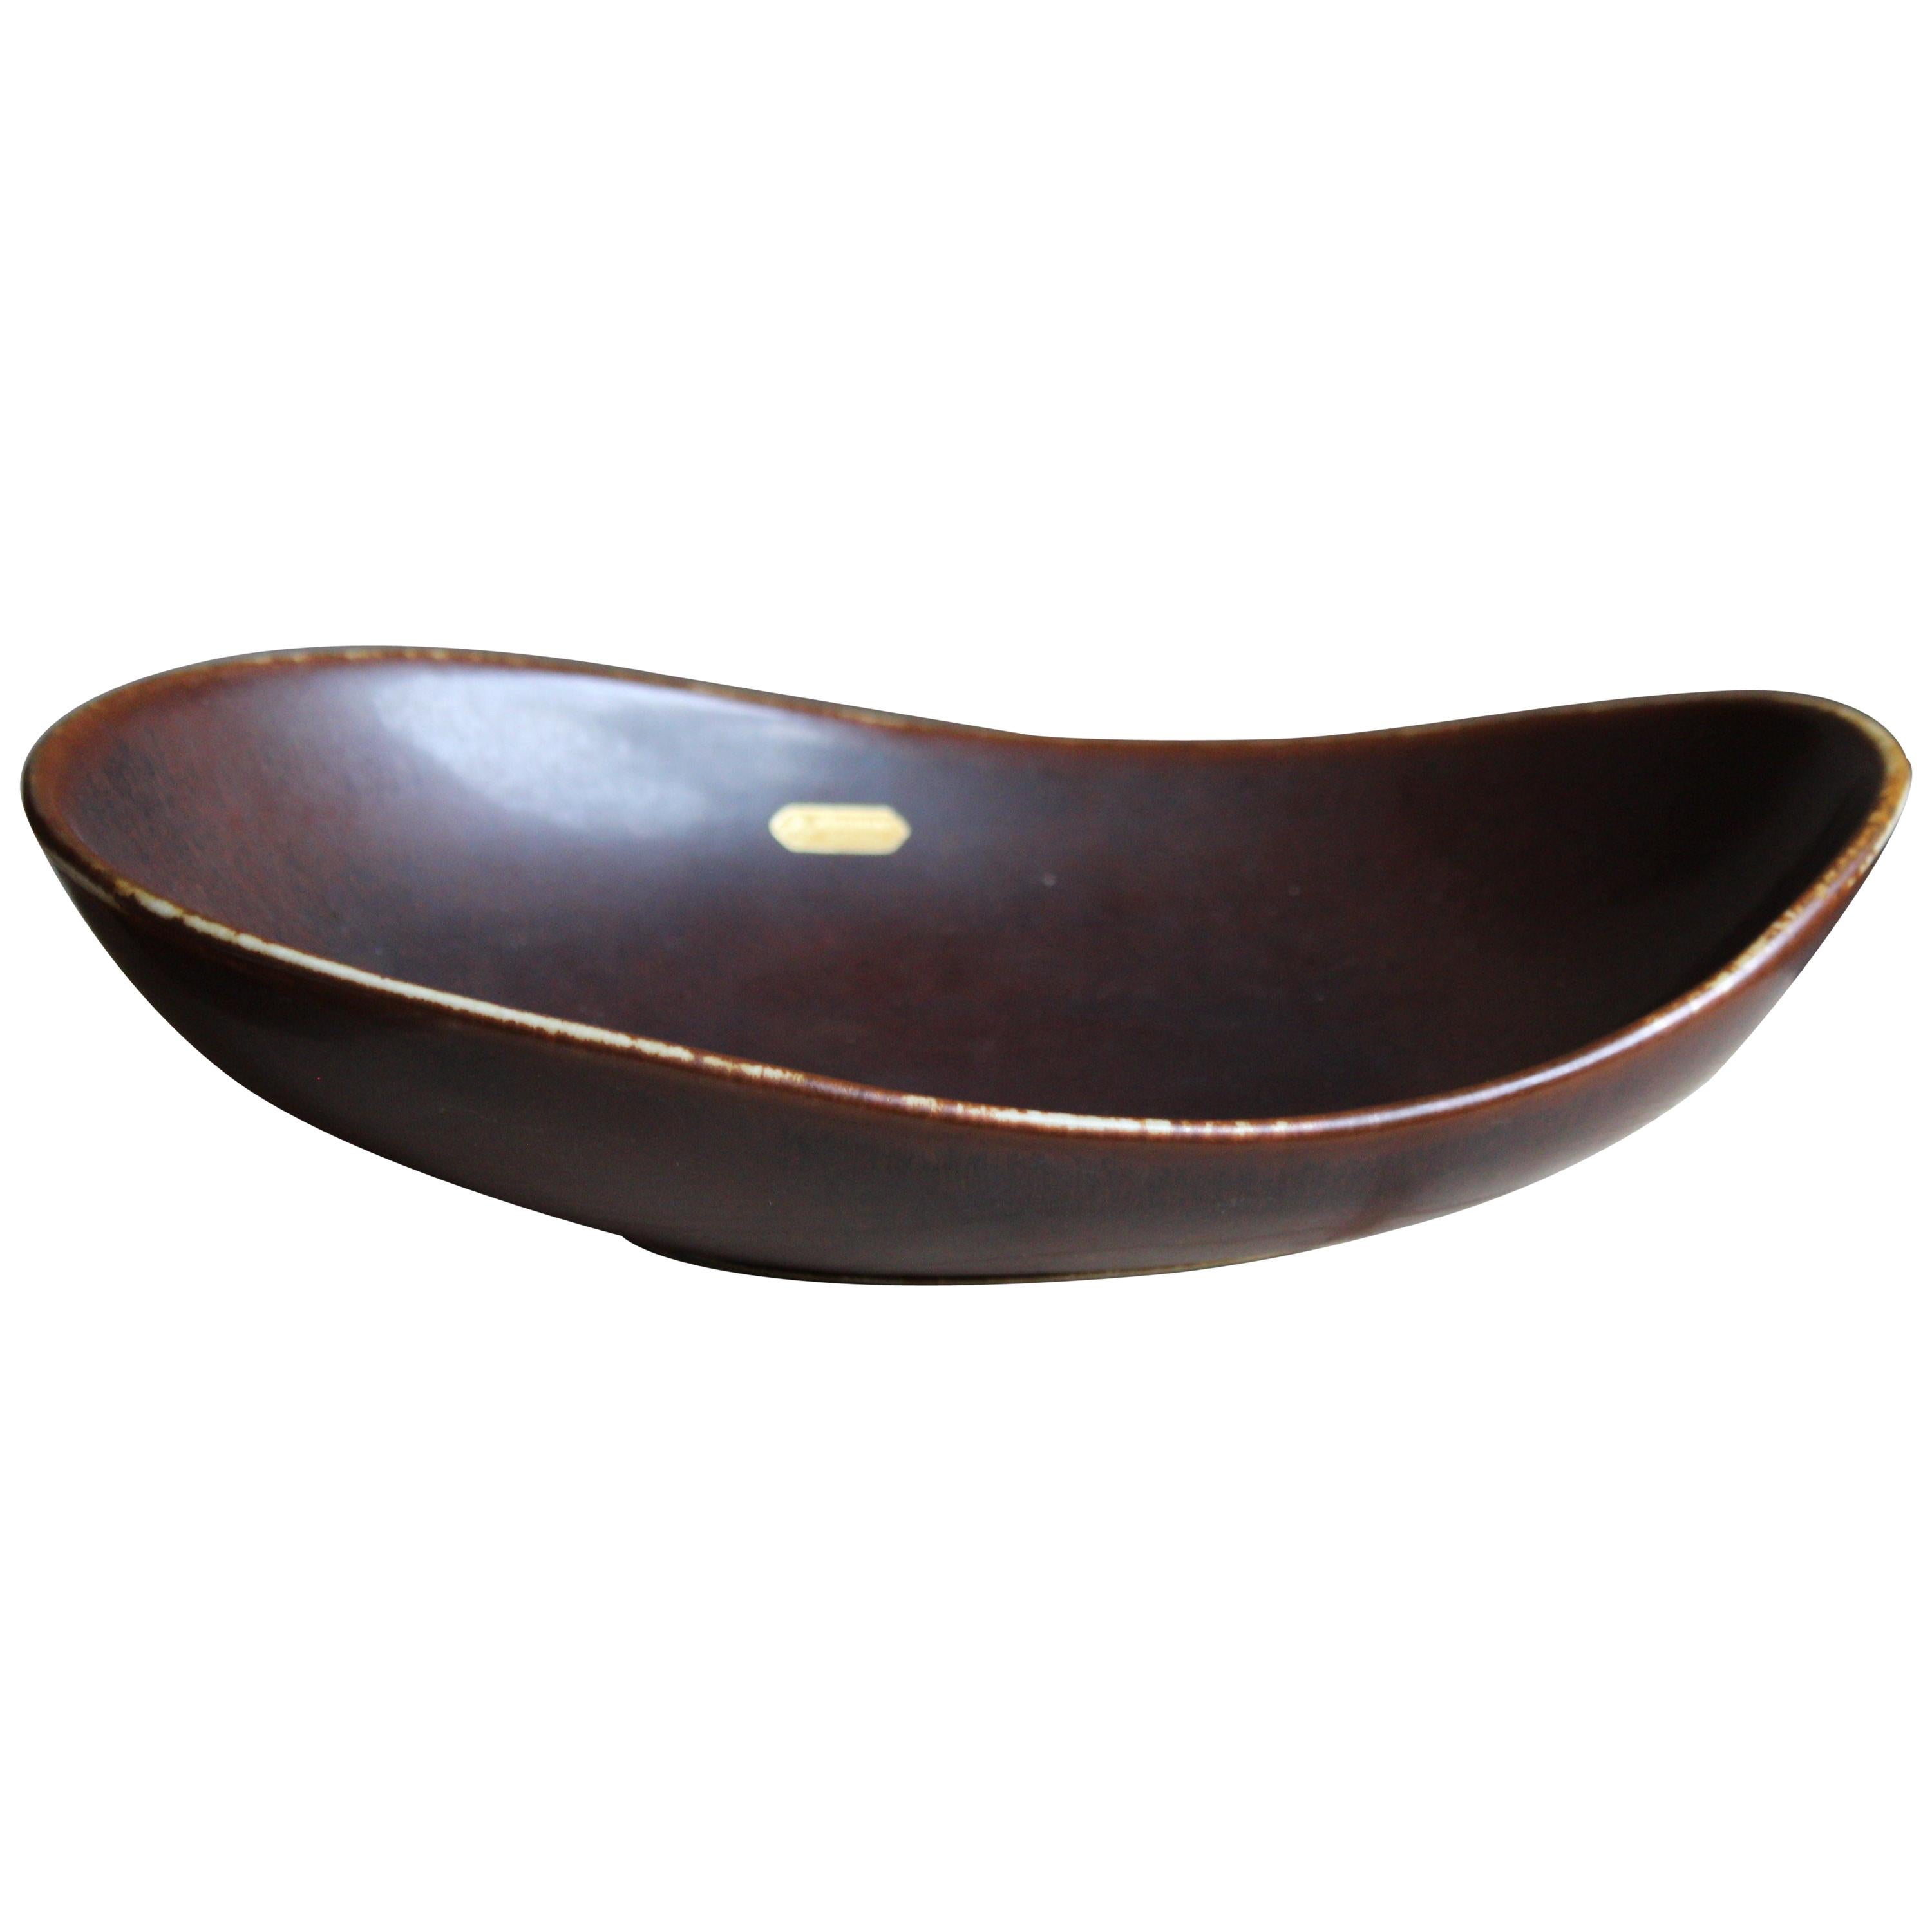 Carl-Harry Stålhane, Organic Bowl, Glazed Stoneware Rörstand, 1950s